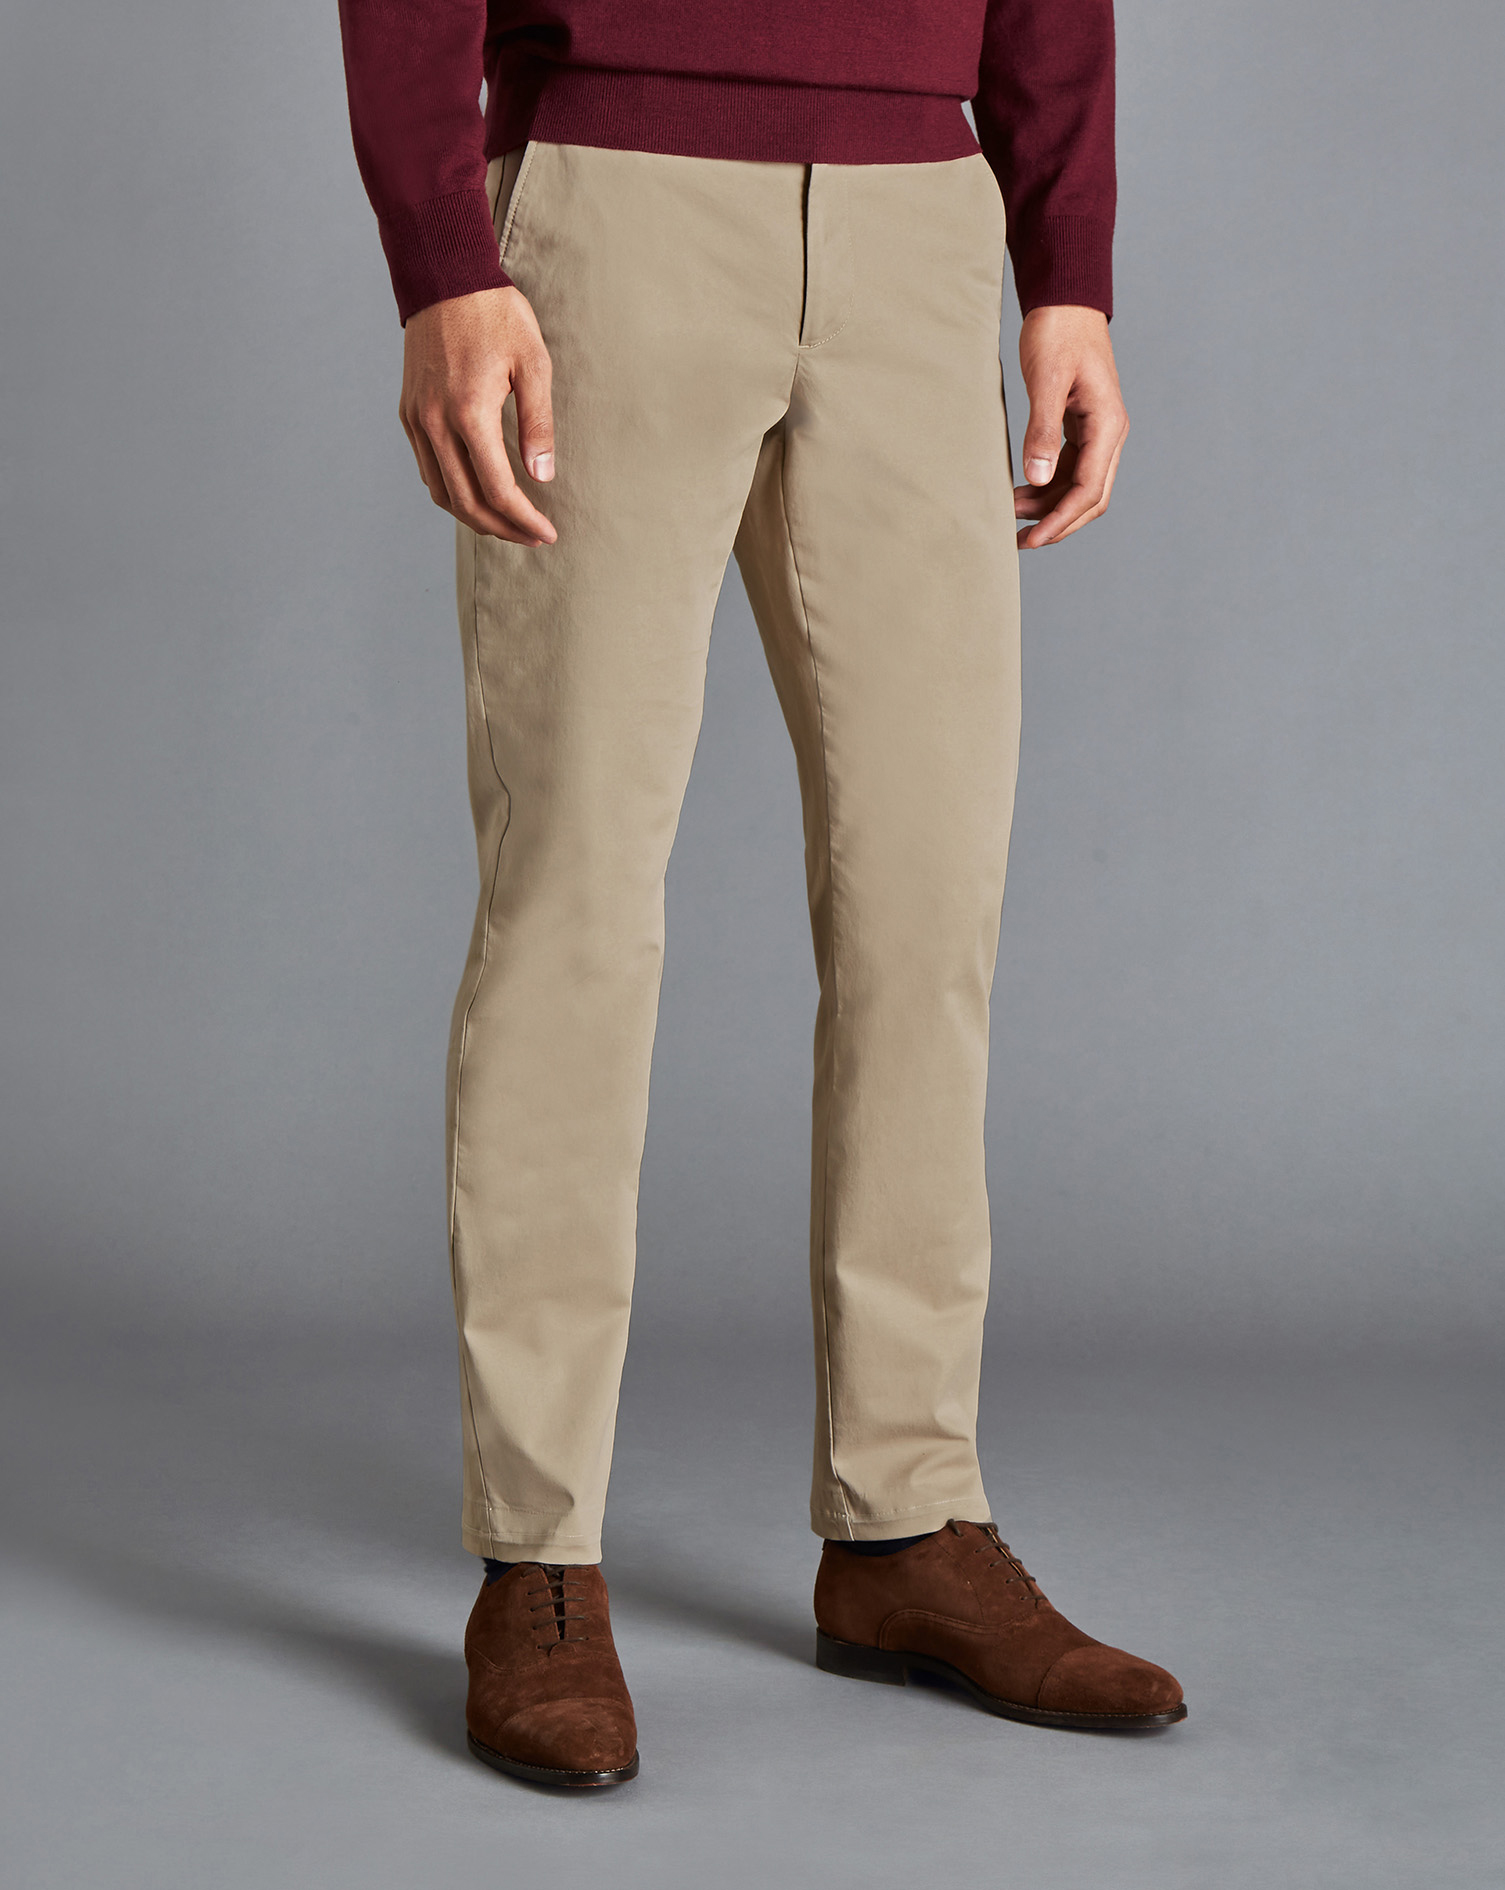 Men's Charles Tyrwhitt Lightweight Trousers - Oatmeal Neutral Size W34 L34 Cotton
